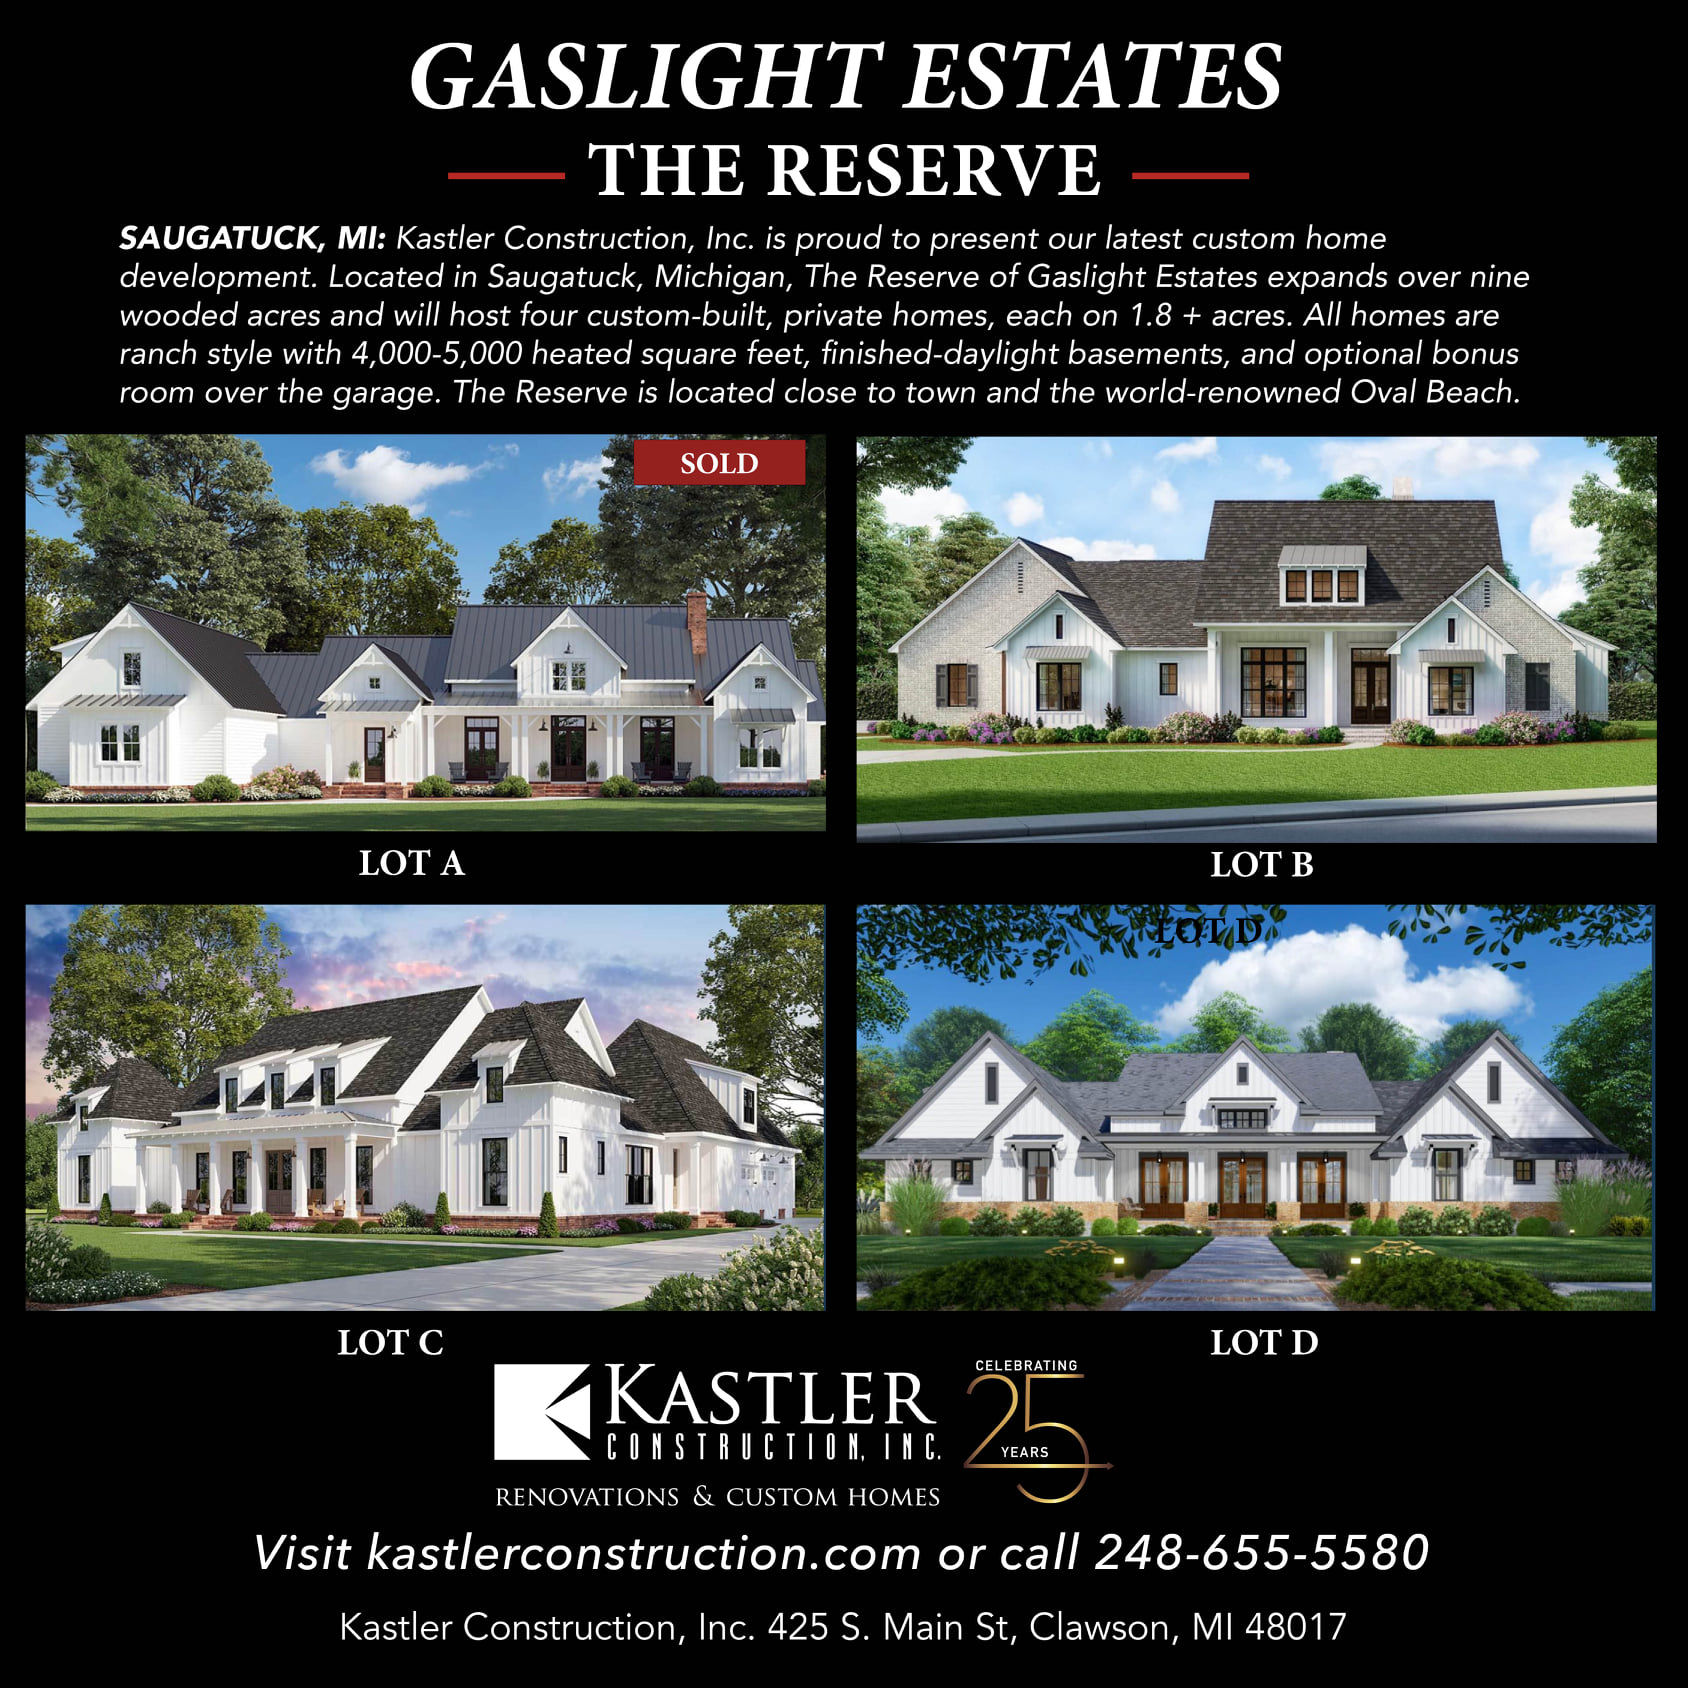 Kastler Construction Inc 425 S Main St, Clawson Michigan 48017